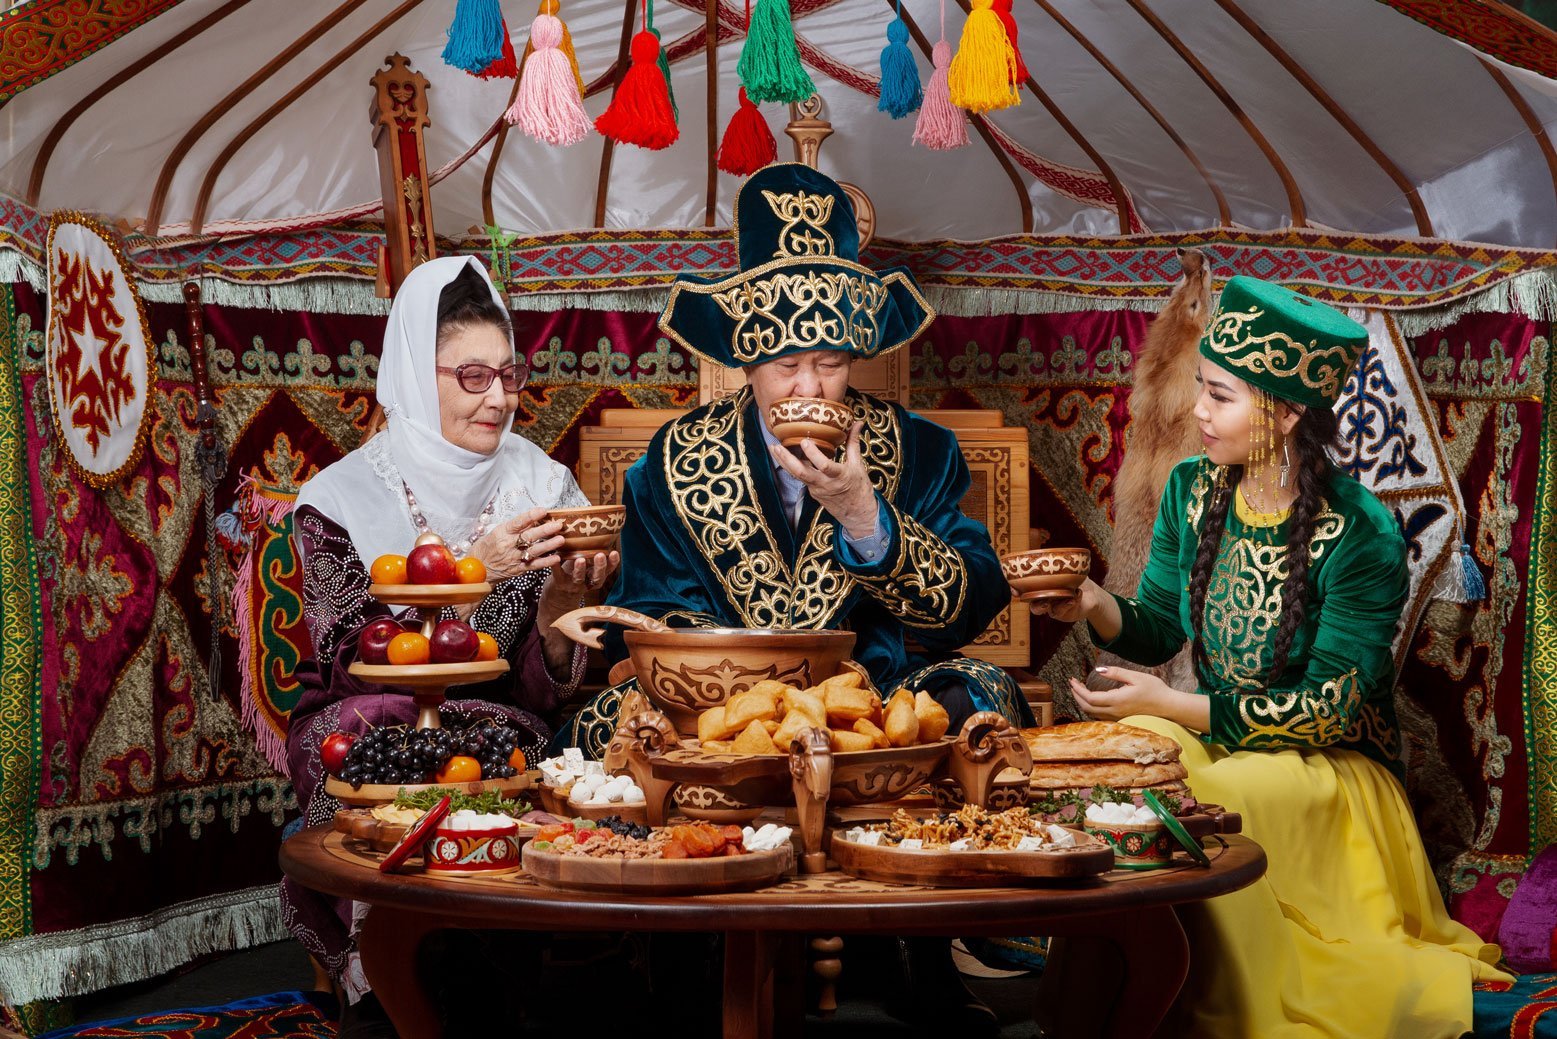 Kazakh me. Гостеприимство казахов. Казахские традиции. Гостеприимство казахского народа. Традиции казахского народа гостеприимство.